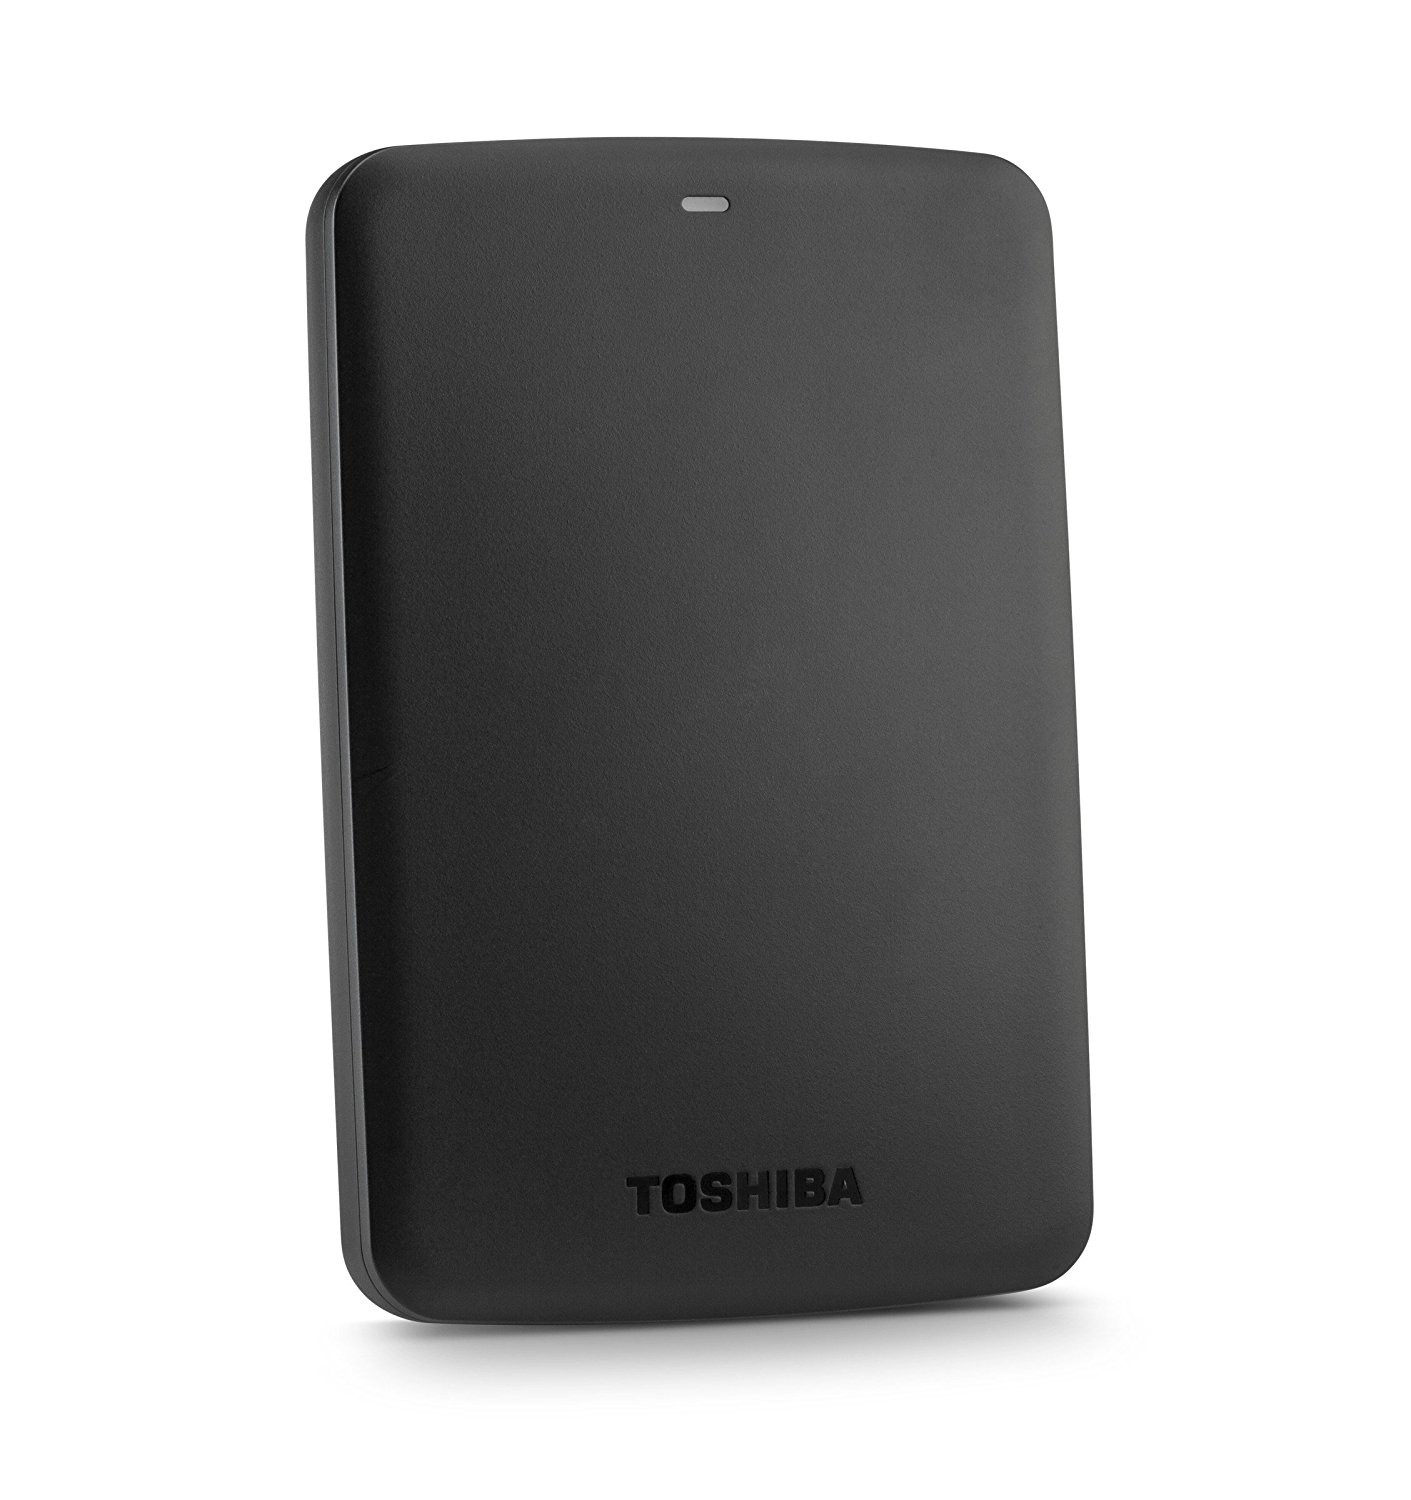 HDTB410AK3AA # TOSHIBA EXTERNAL HDD CANVIO BASIC 1TB, BLACK